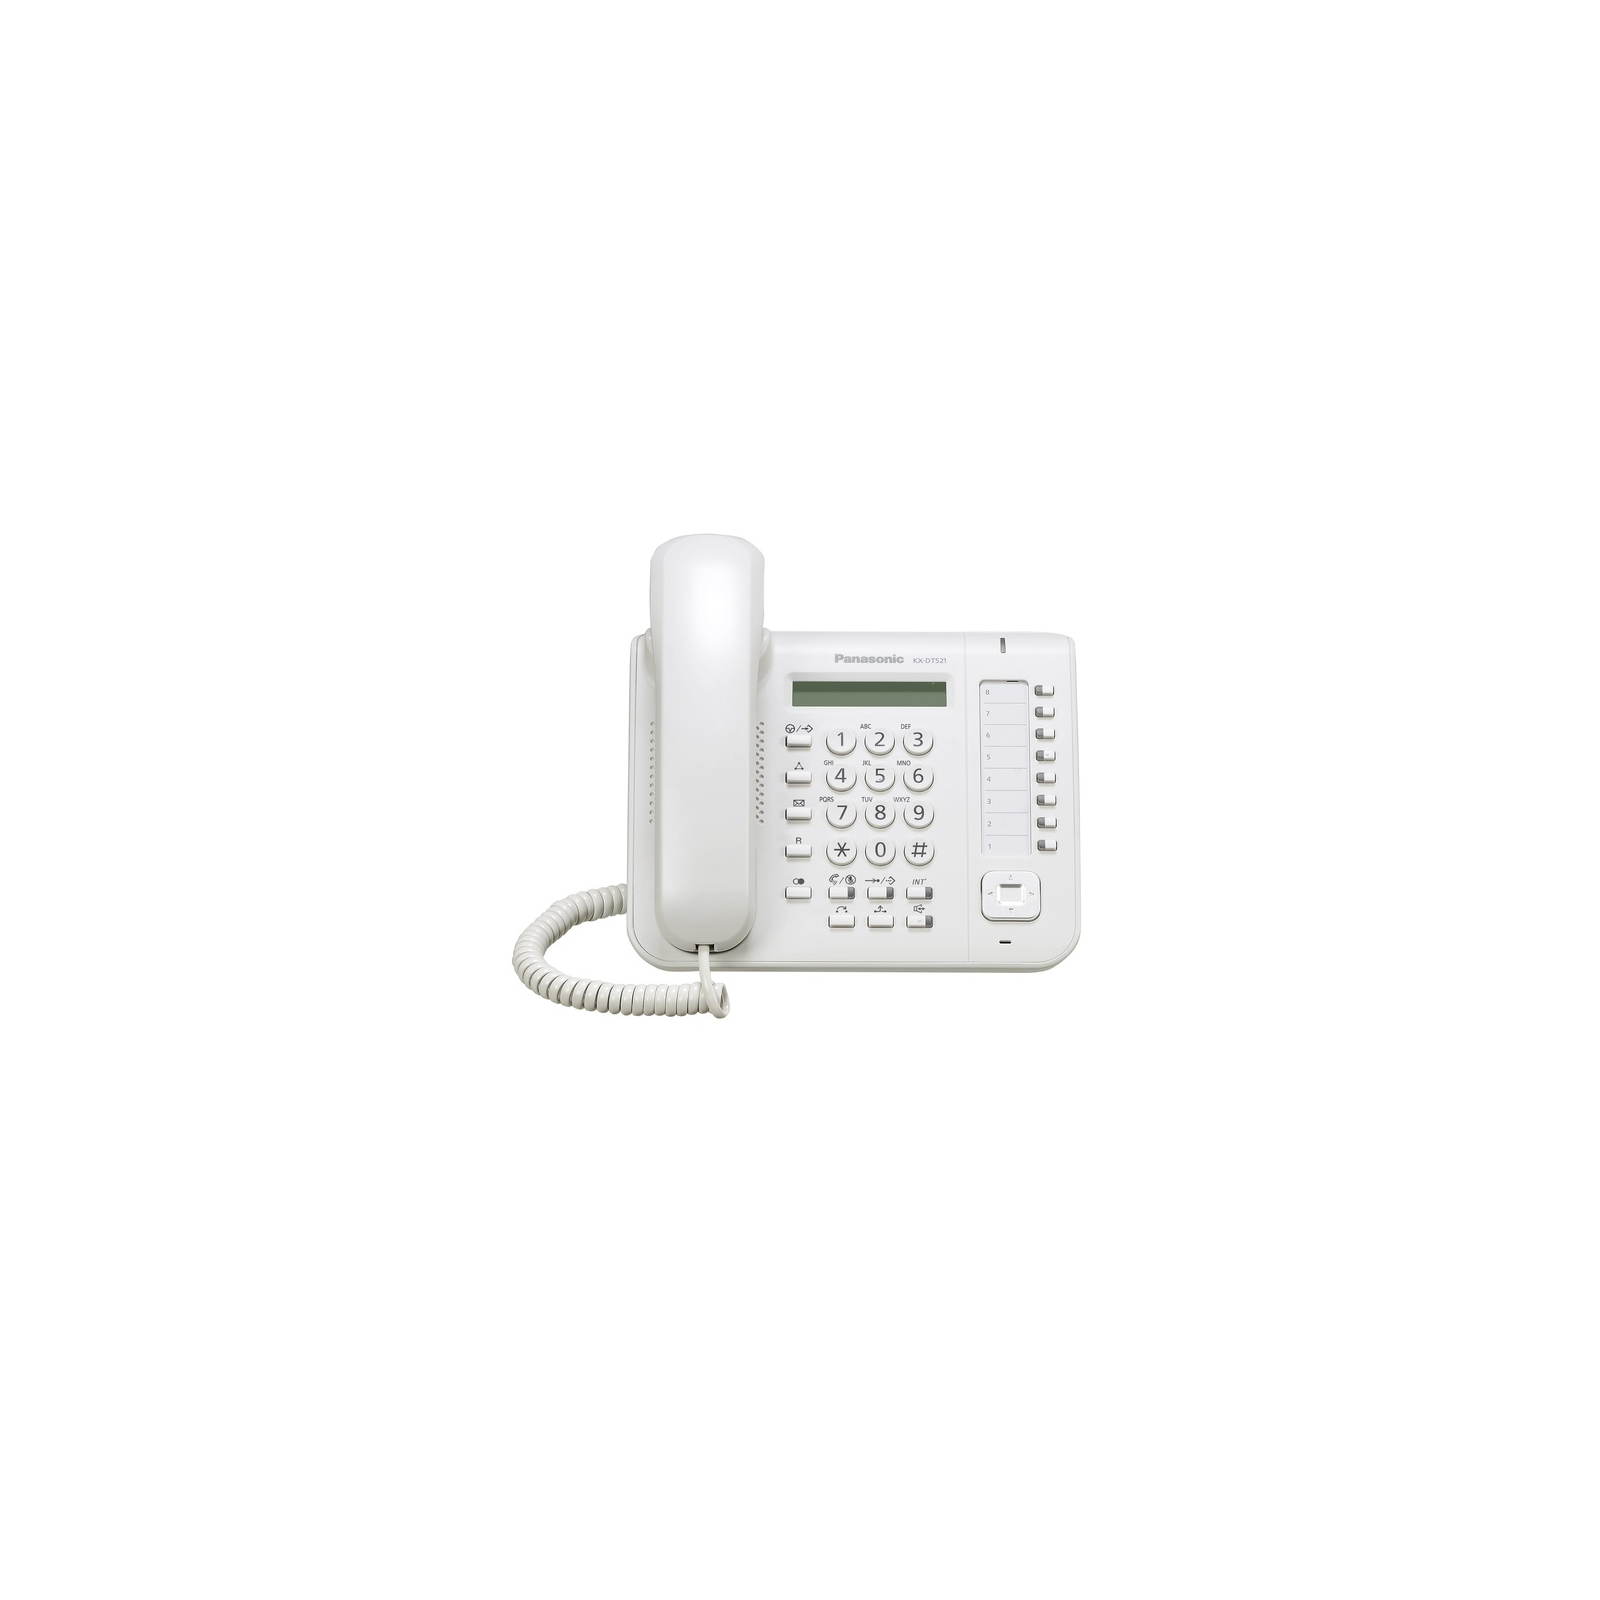 Телефон Panasonic KX-DT521RU White (KX-DT521RU)